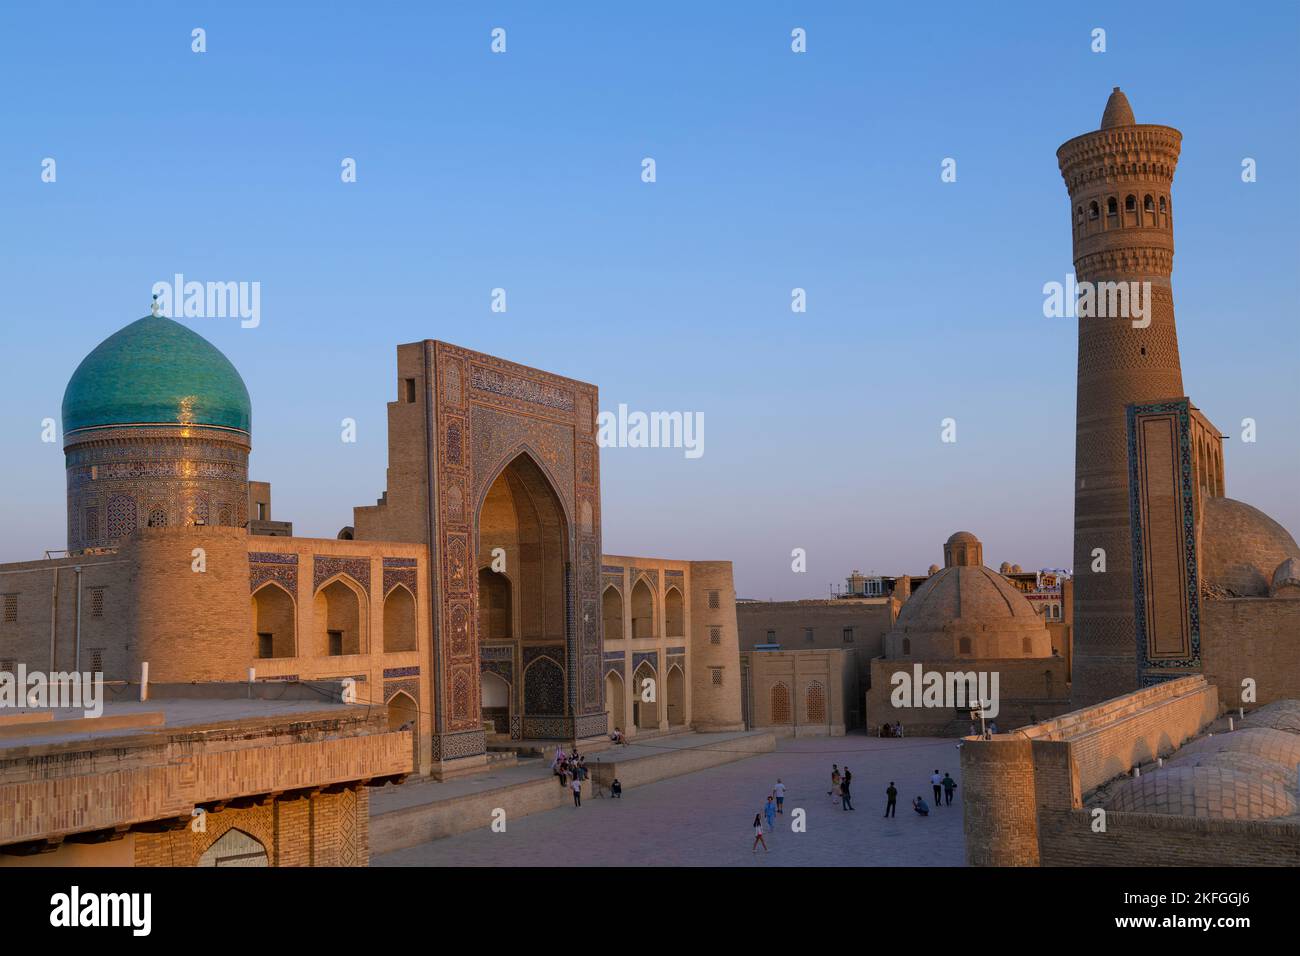 BUJARA, UZBEKISTÁN - 08 DE SEPTIEMBRE de 2022: Madrasah mir-i-arab y minarete poi-kalon al atardecer. Centro histórico de Bujara, Uzbekistán Foto de stock